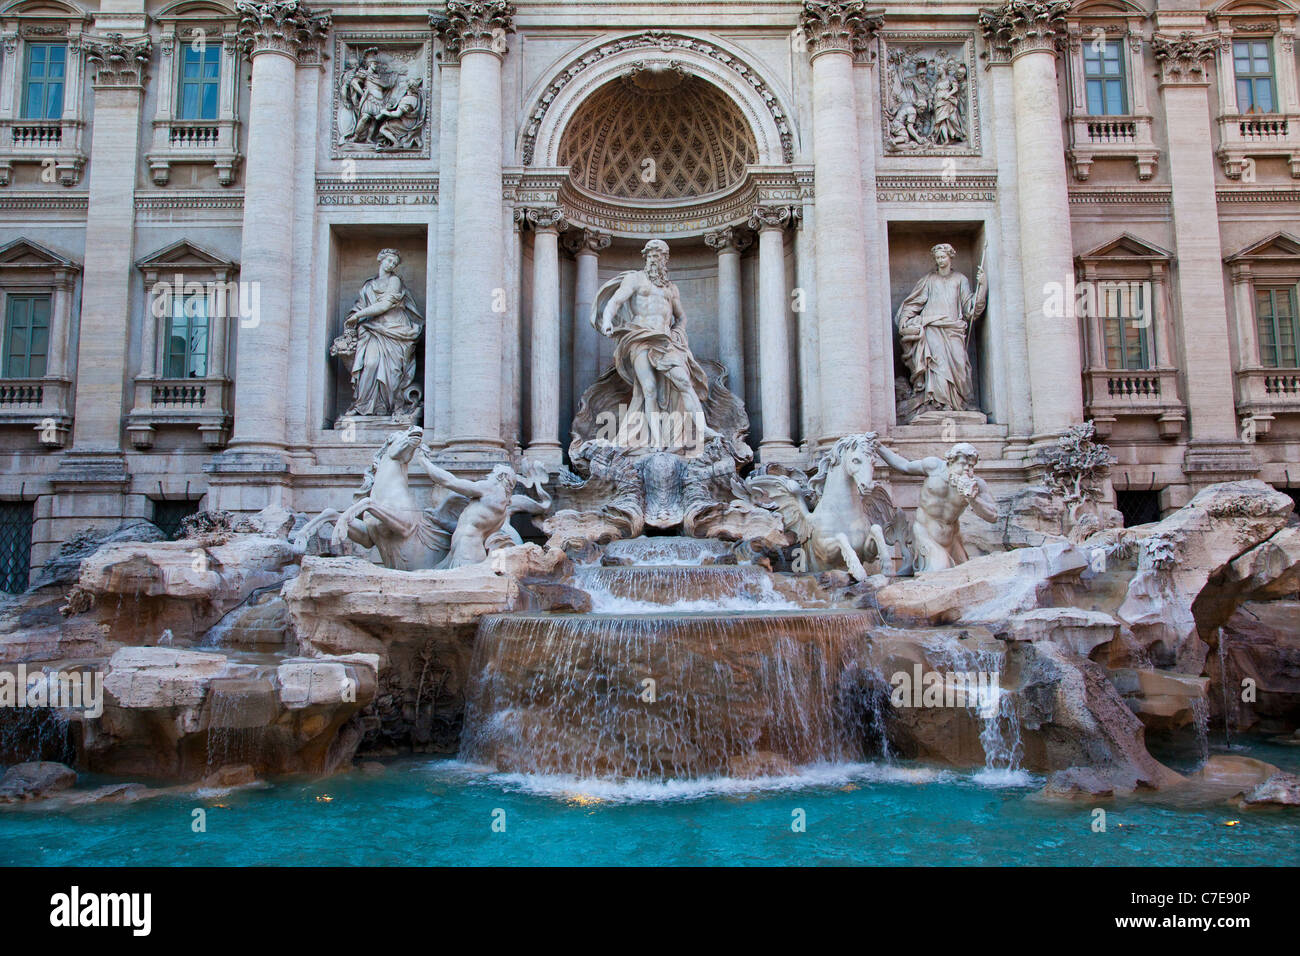 The iconic Trevi Fountain (Fontana di Trevi) in Rome. Stock Photo